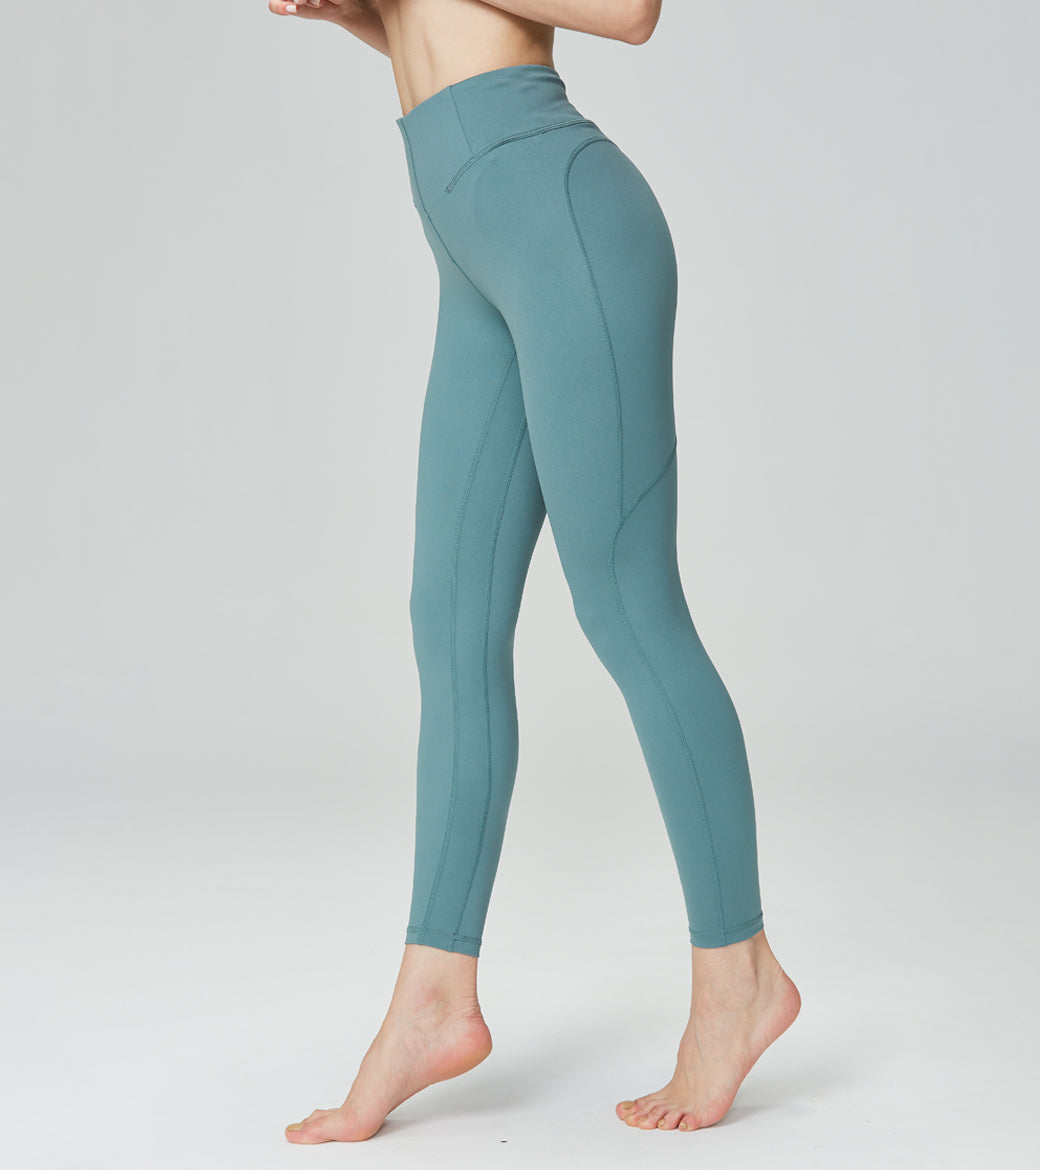 LOVESOFT Women's Green Tight-fitting High-waist Hip-lifting Leggings